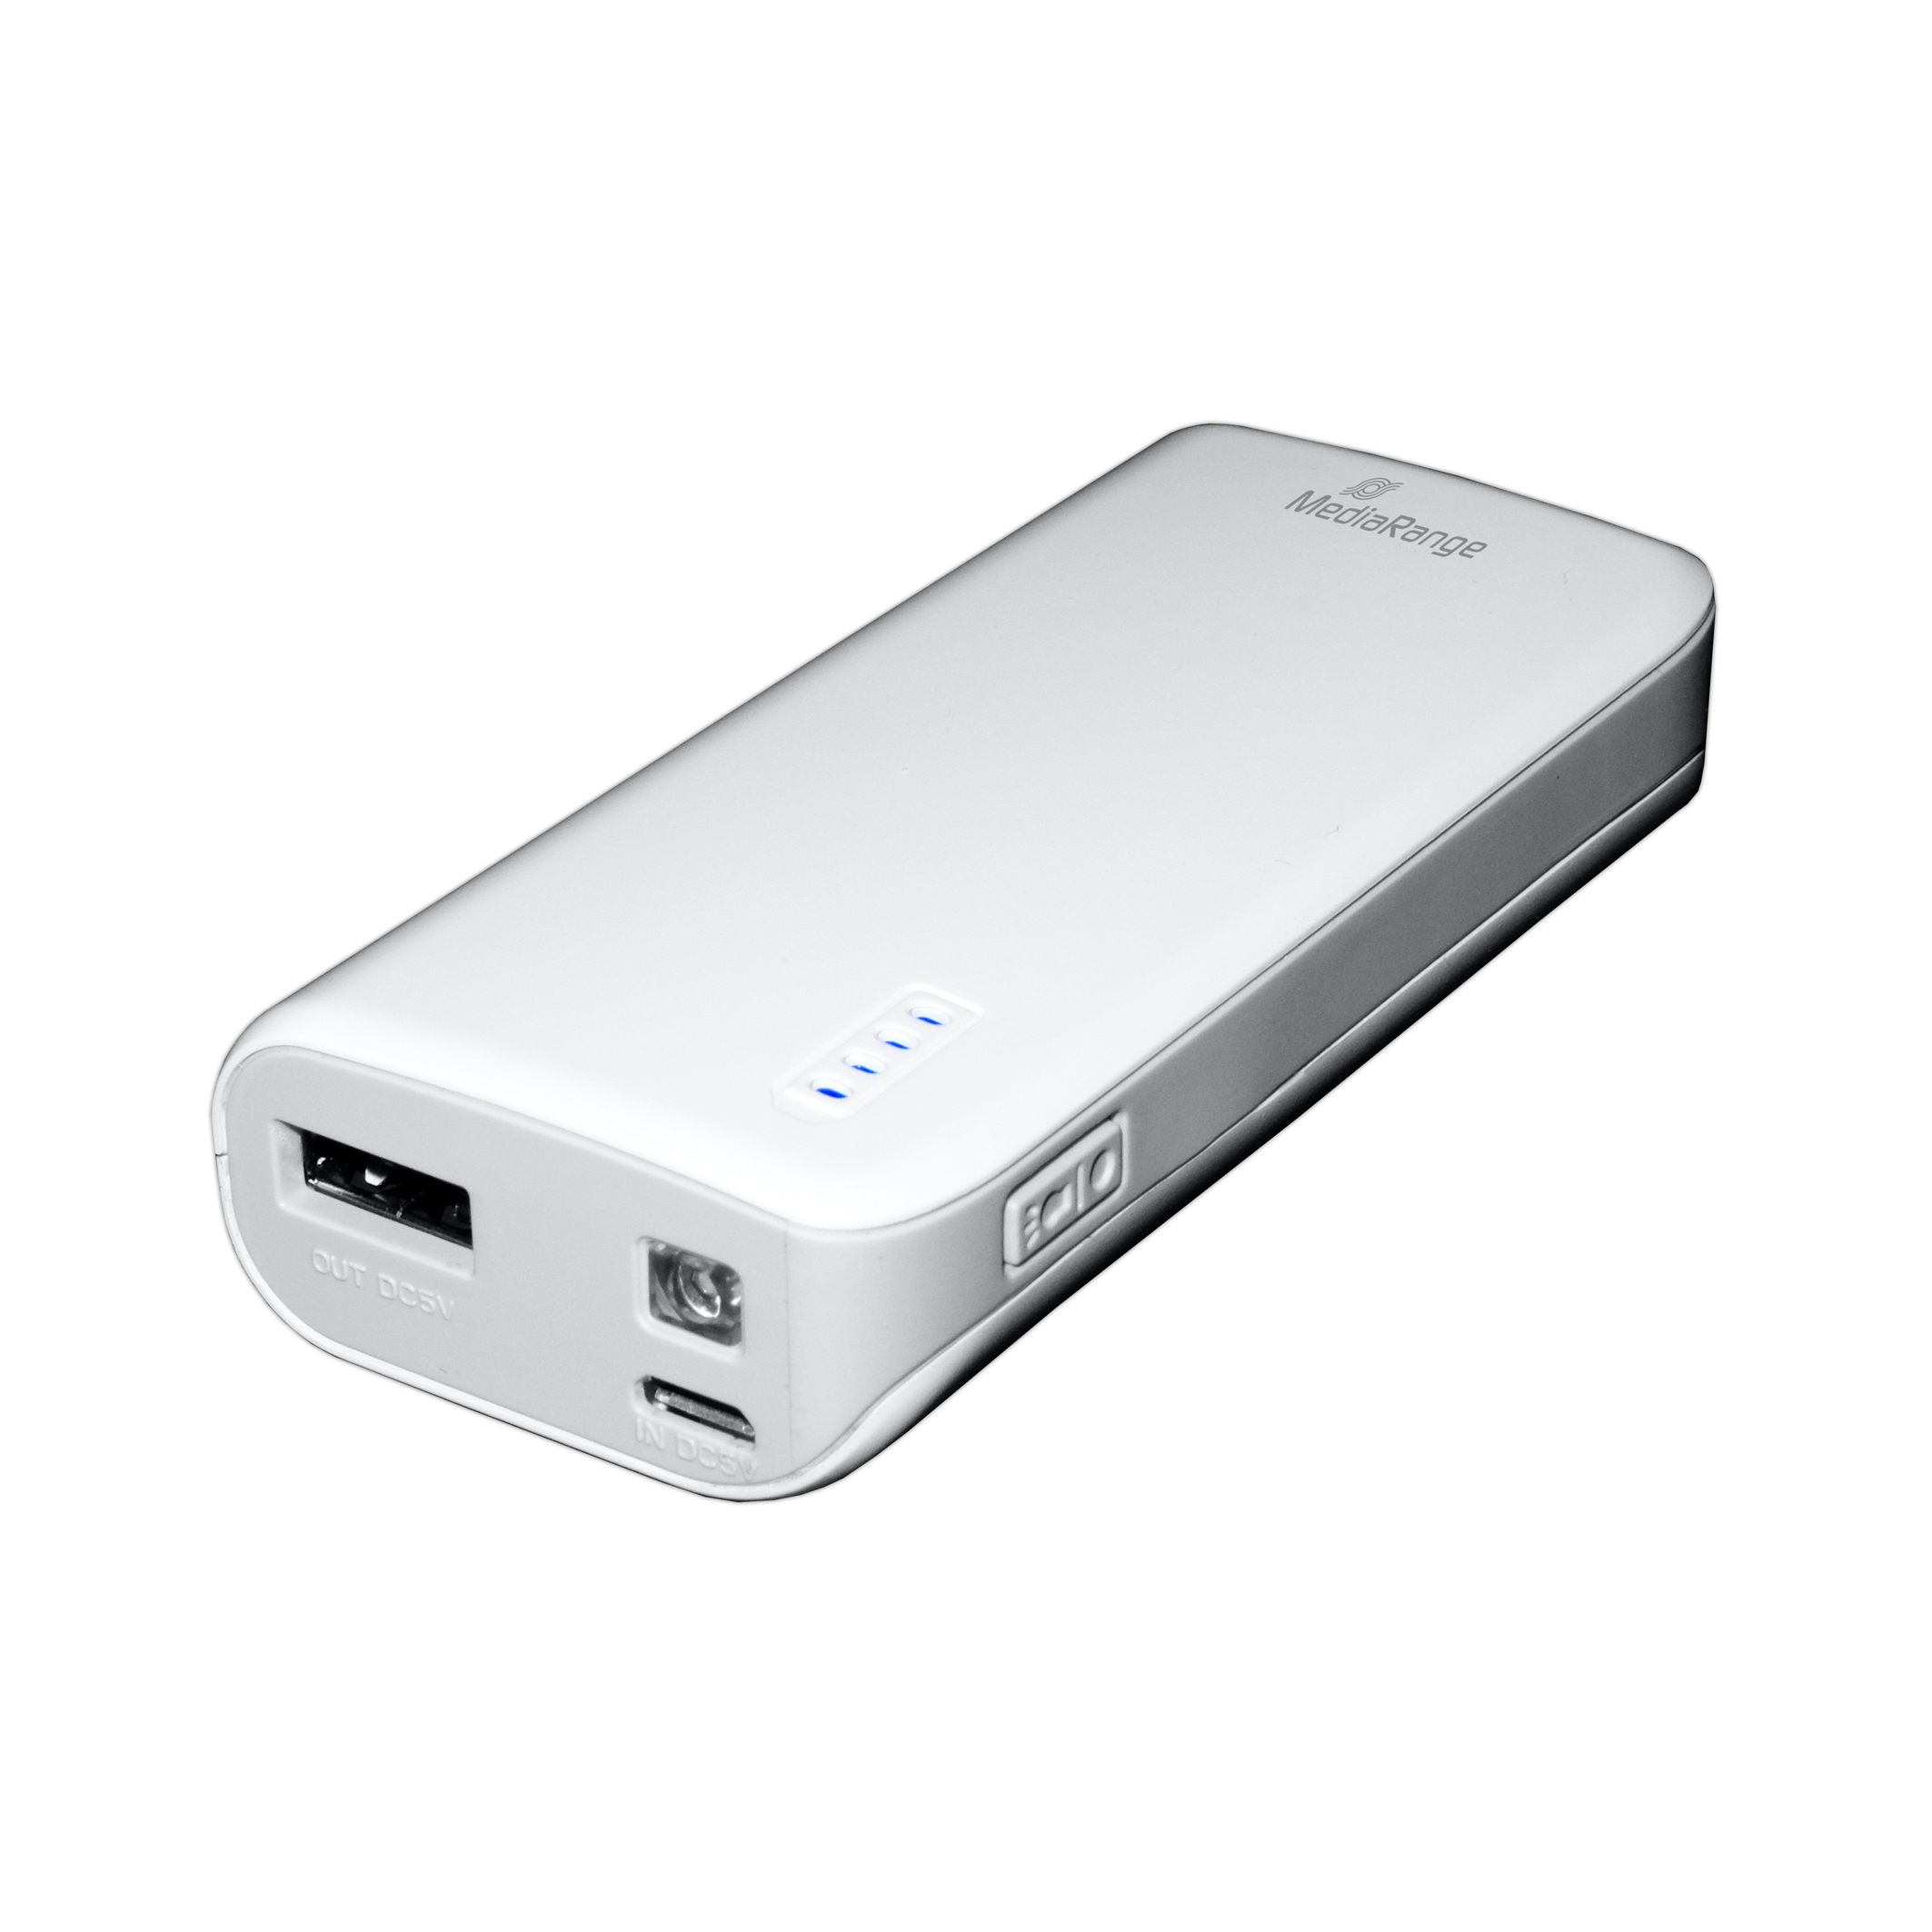 MEDIARANGE Mobile Charger - Powerbank - 5200 mAh - 2.1 A (USB)